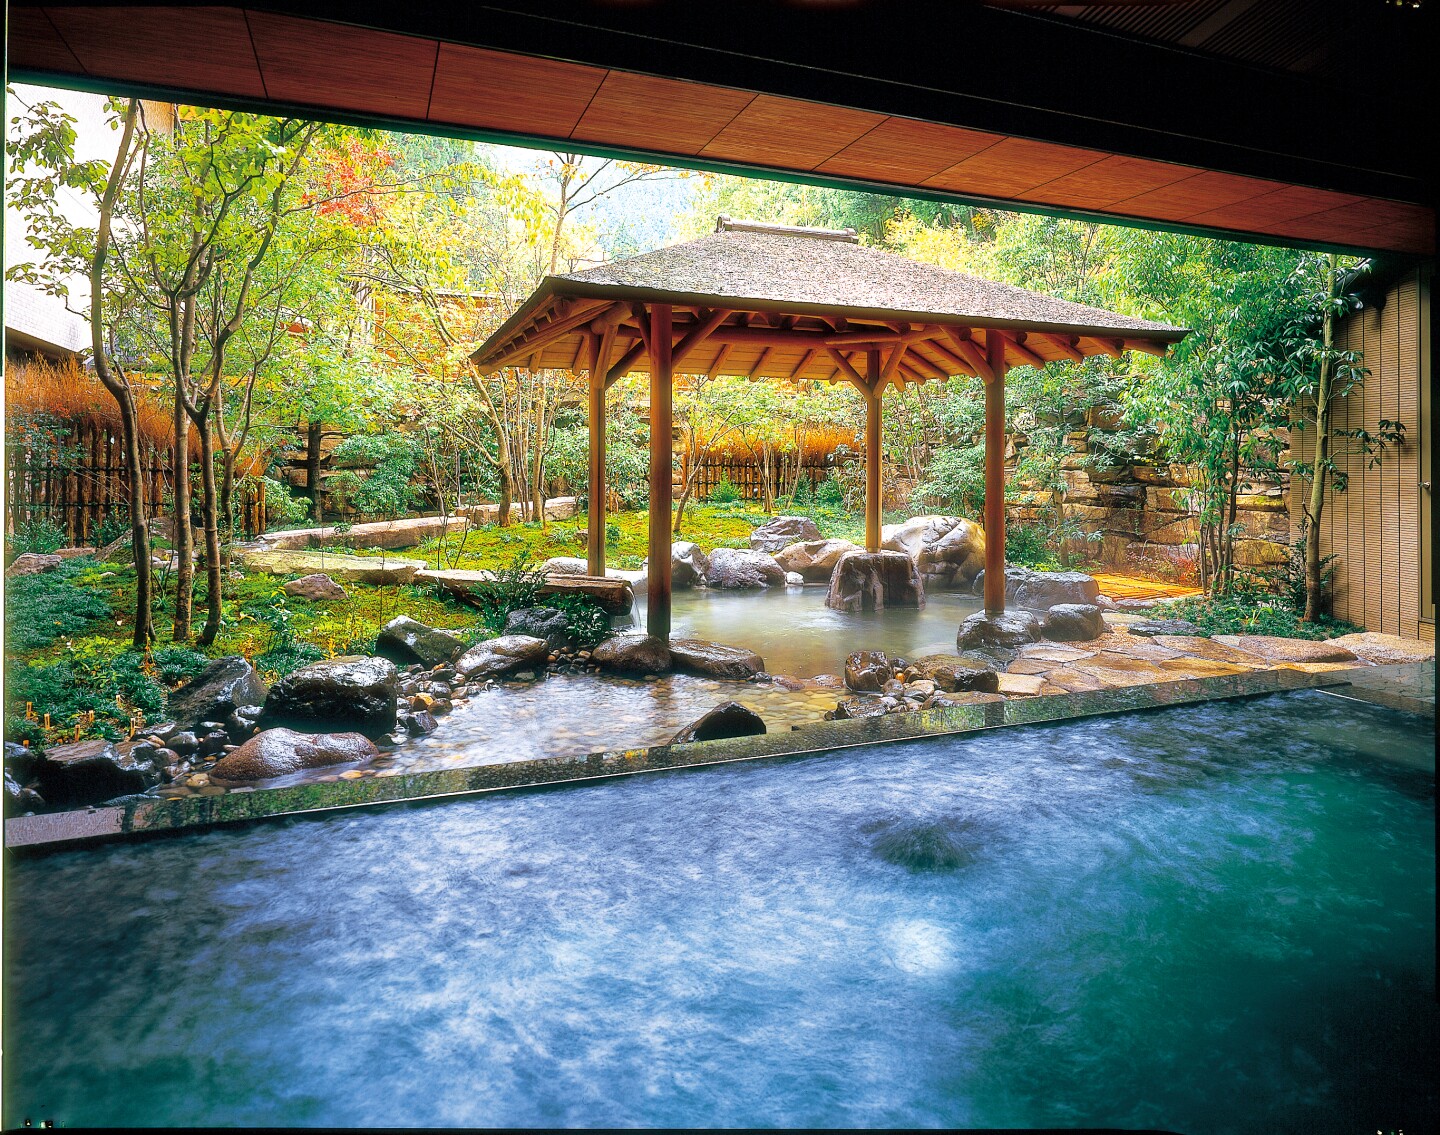 Nishimuraya Hotel Shogetsutei offers a classic Japanese onsen experience.城崎温泉位於日本關西兵庫縣北方，是關西地區日本海沿岸的溫泉區，這裡不僅是西村屋（Nishimuraya Hotel Shogetsutei）的家，更是一處秘境